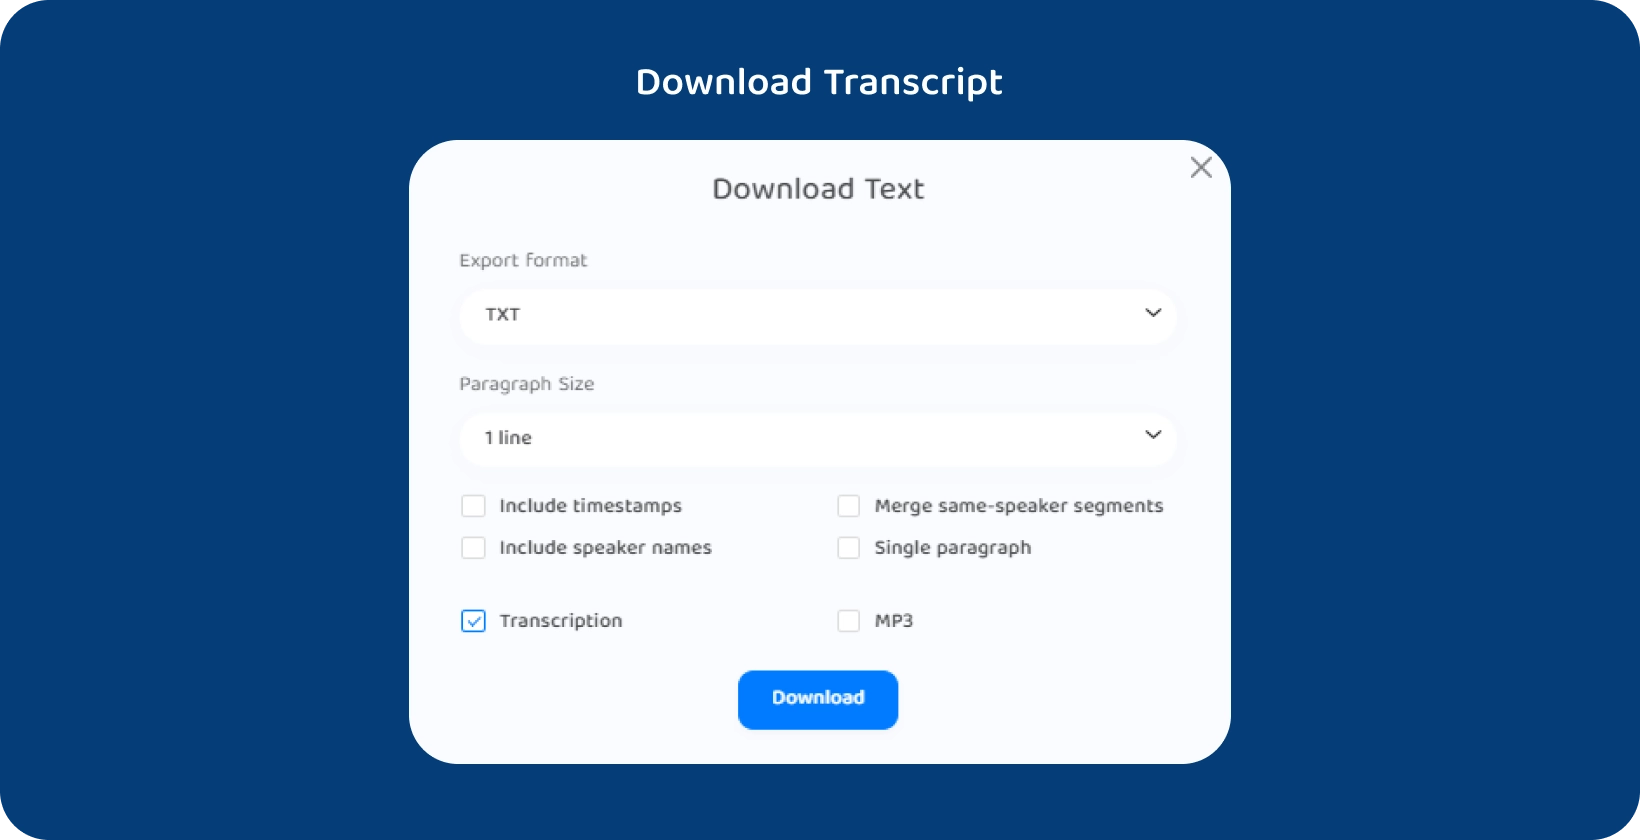 Transkriptor interfejs koji prikazuje opcije za preuzimanje teksta transkribovanog predavanja.